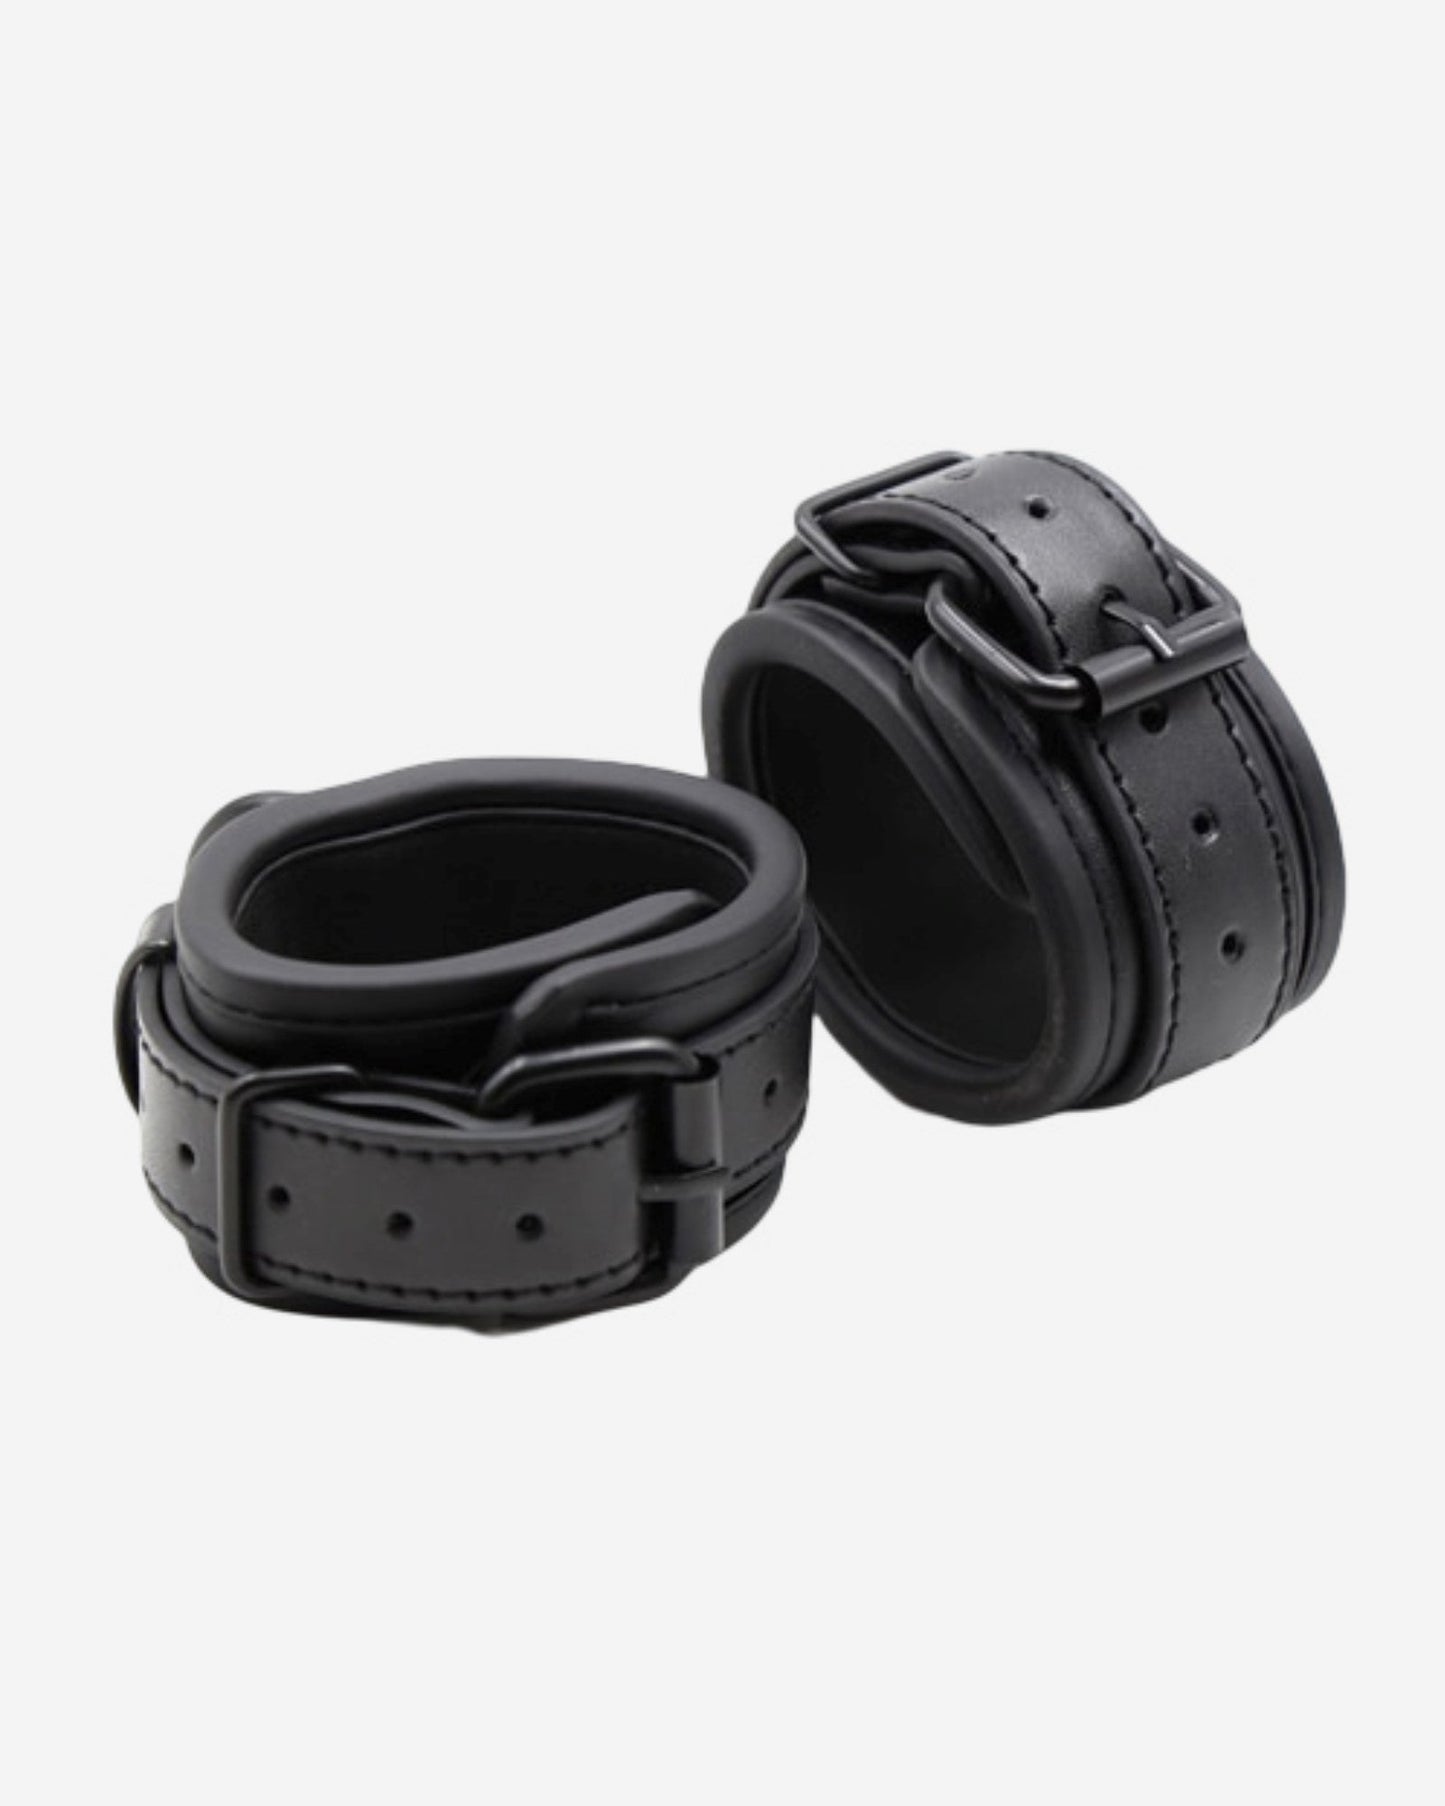 Handcuffs & Restraints Sexy Adjustable Leather Handcuffs